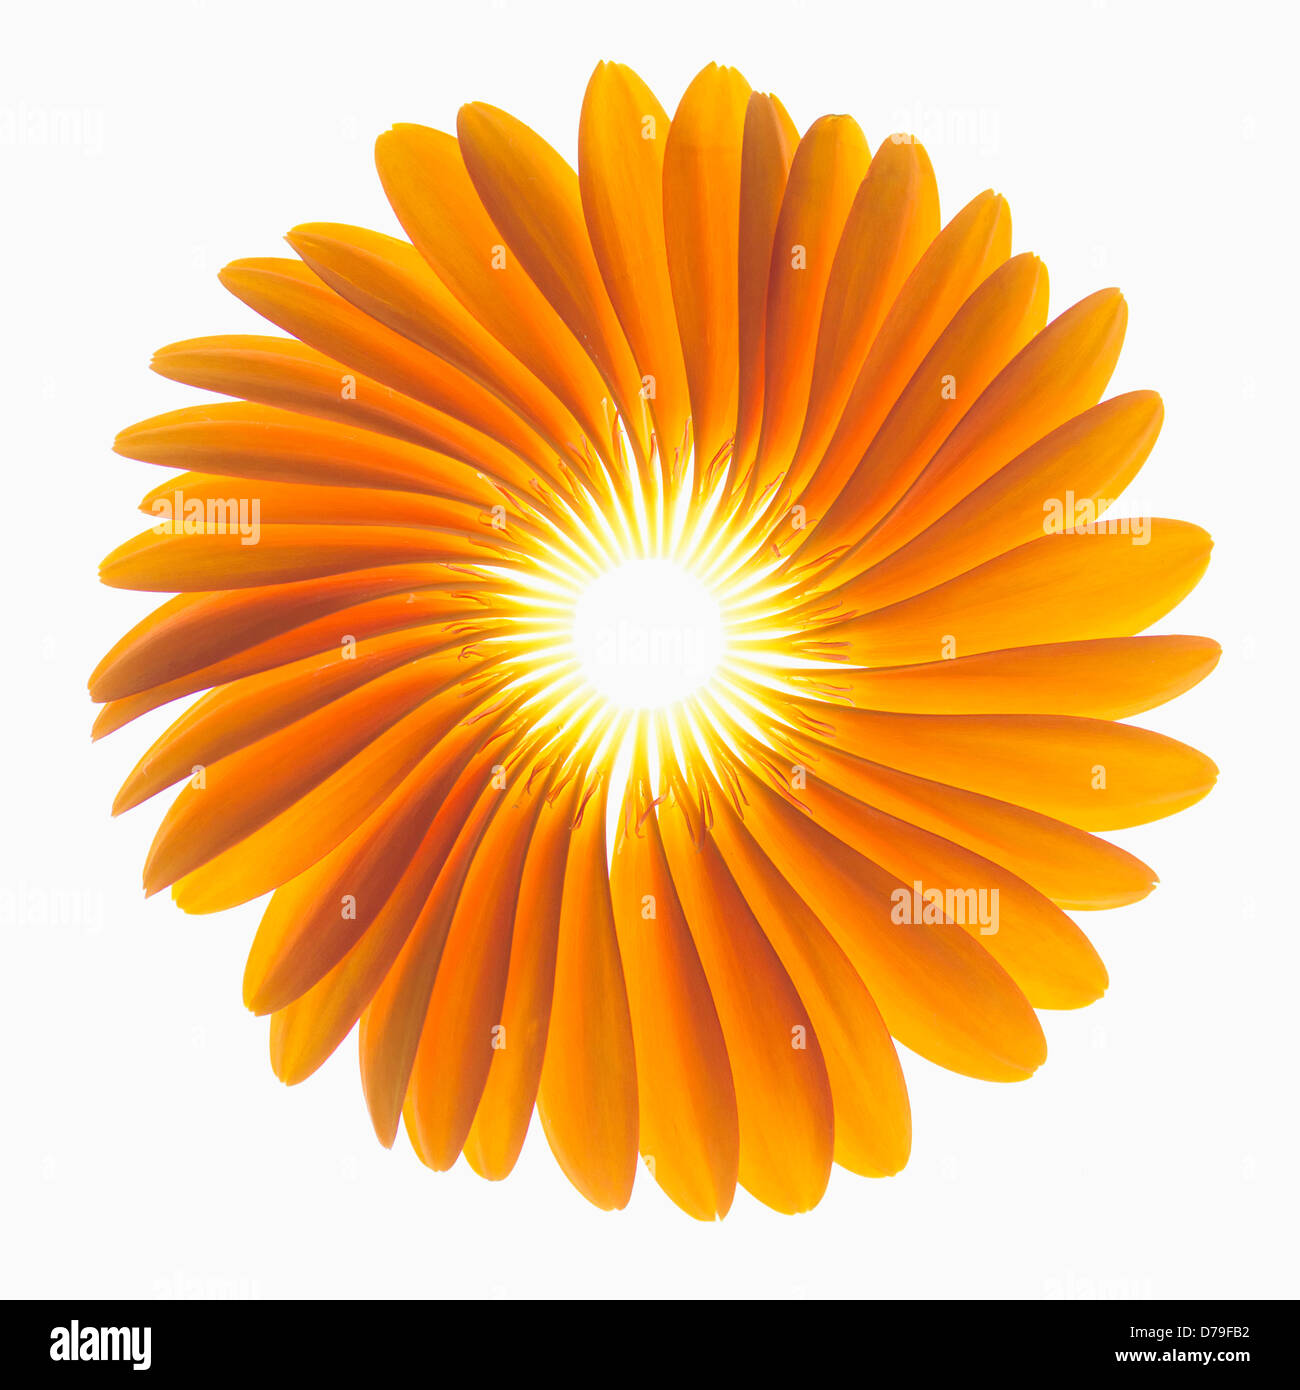 Gerbera jamesonii 'Optima', Fan of orange petals delicately placed to form a representative shape of a Gerbera flower. Stock Photo